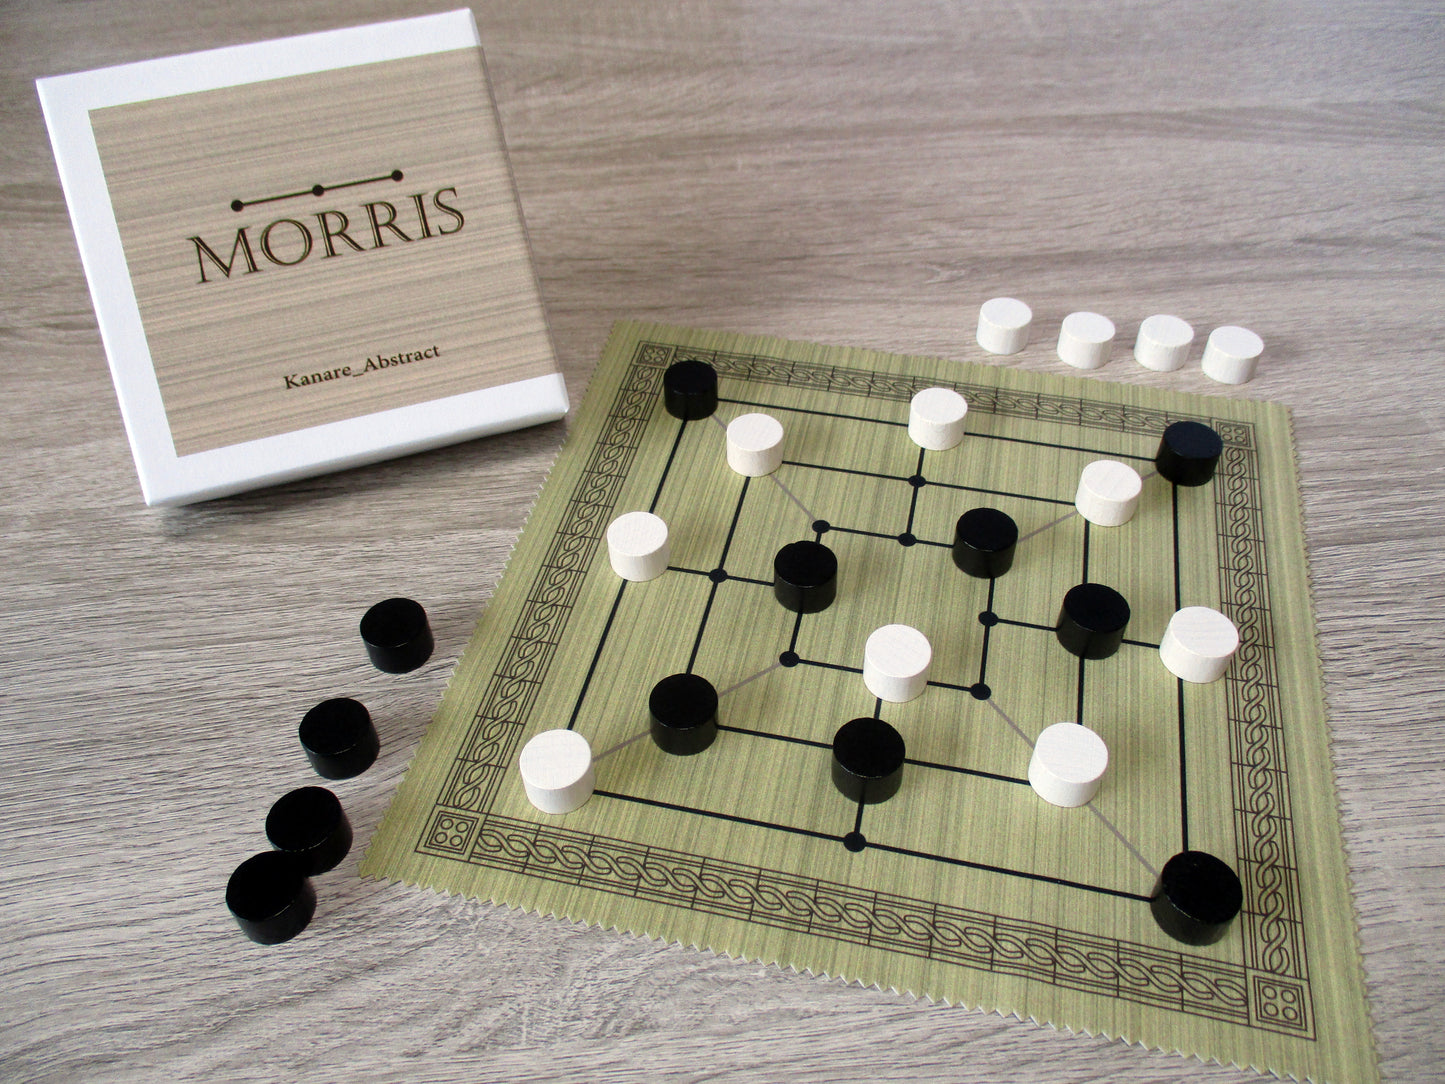 Nine Men's Morris Online  Play the Mill Game Online Free